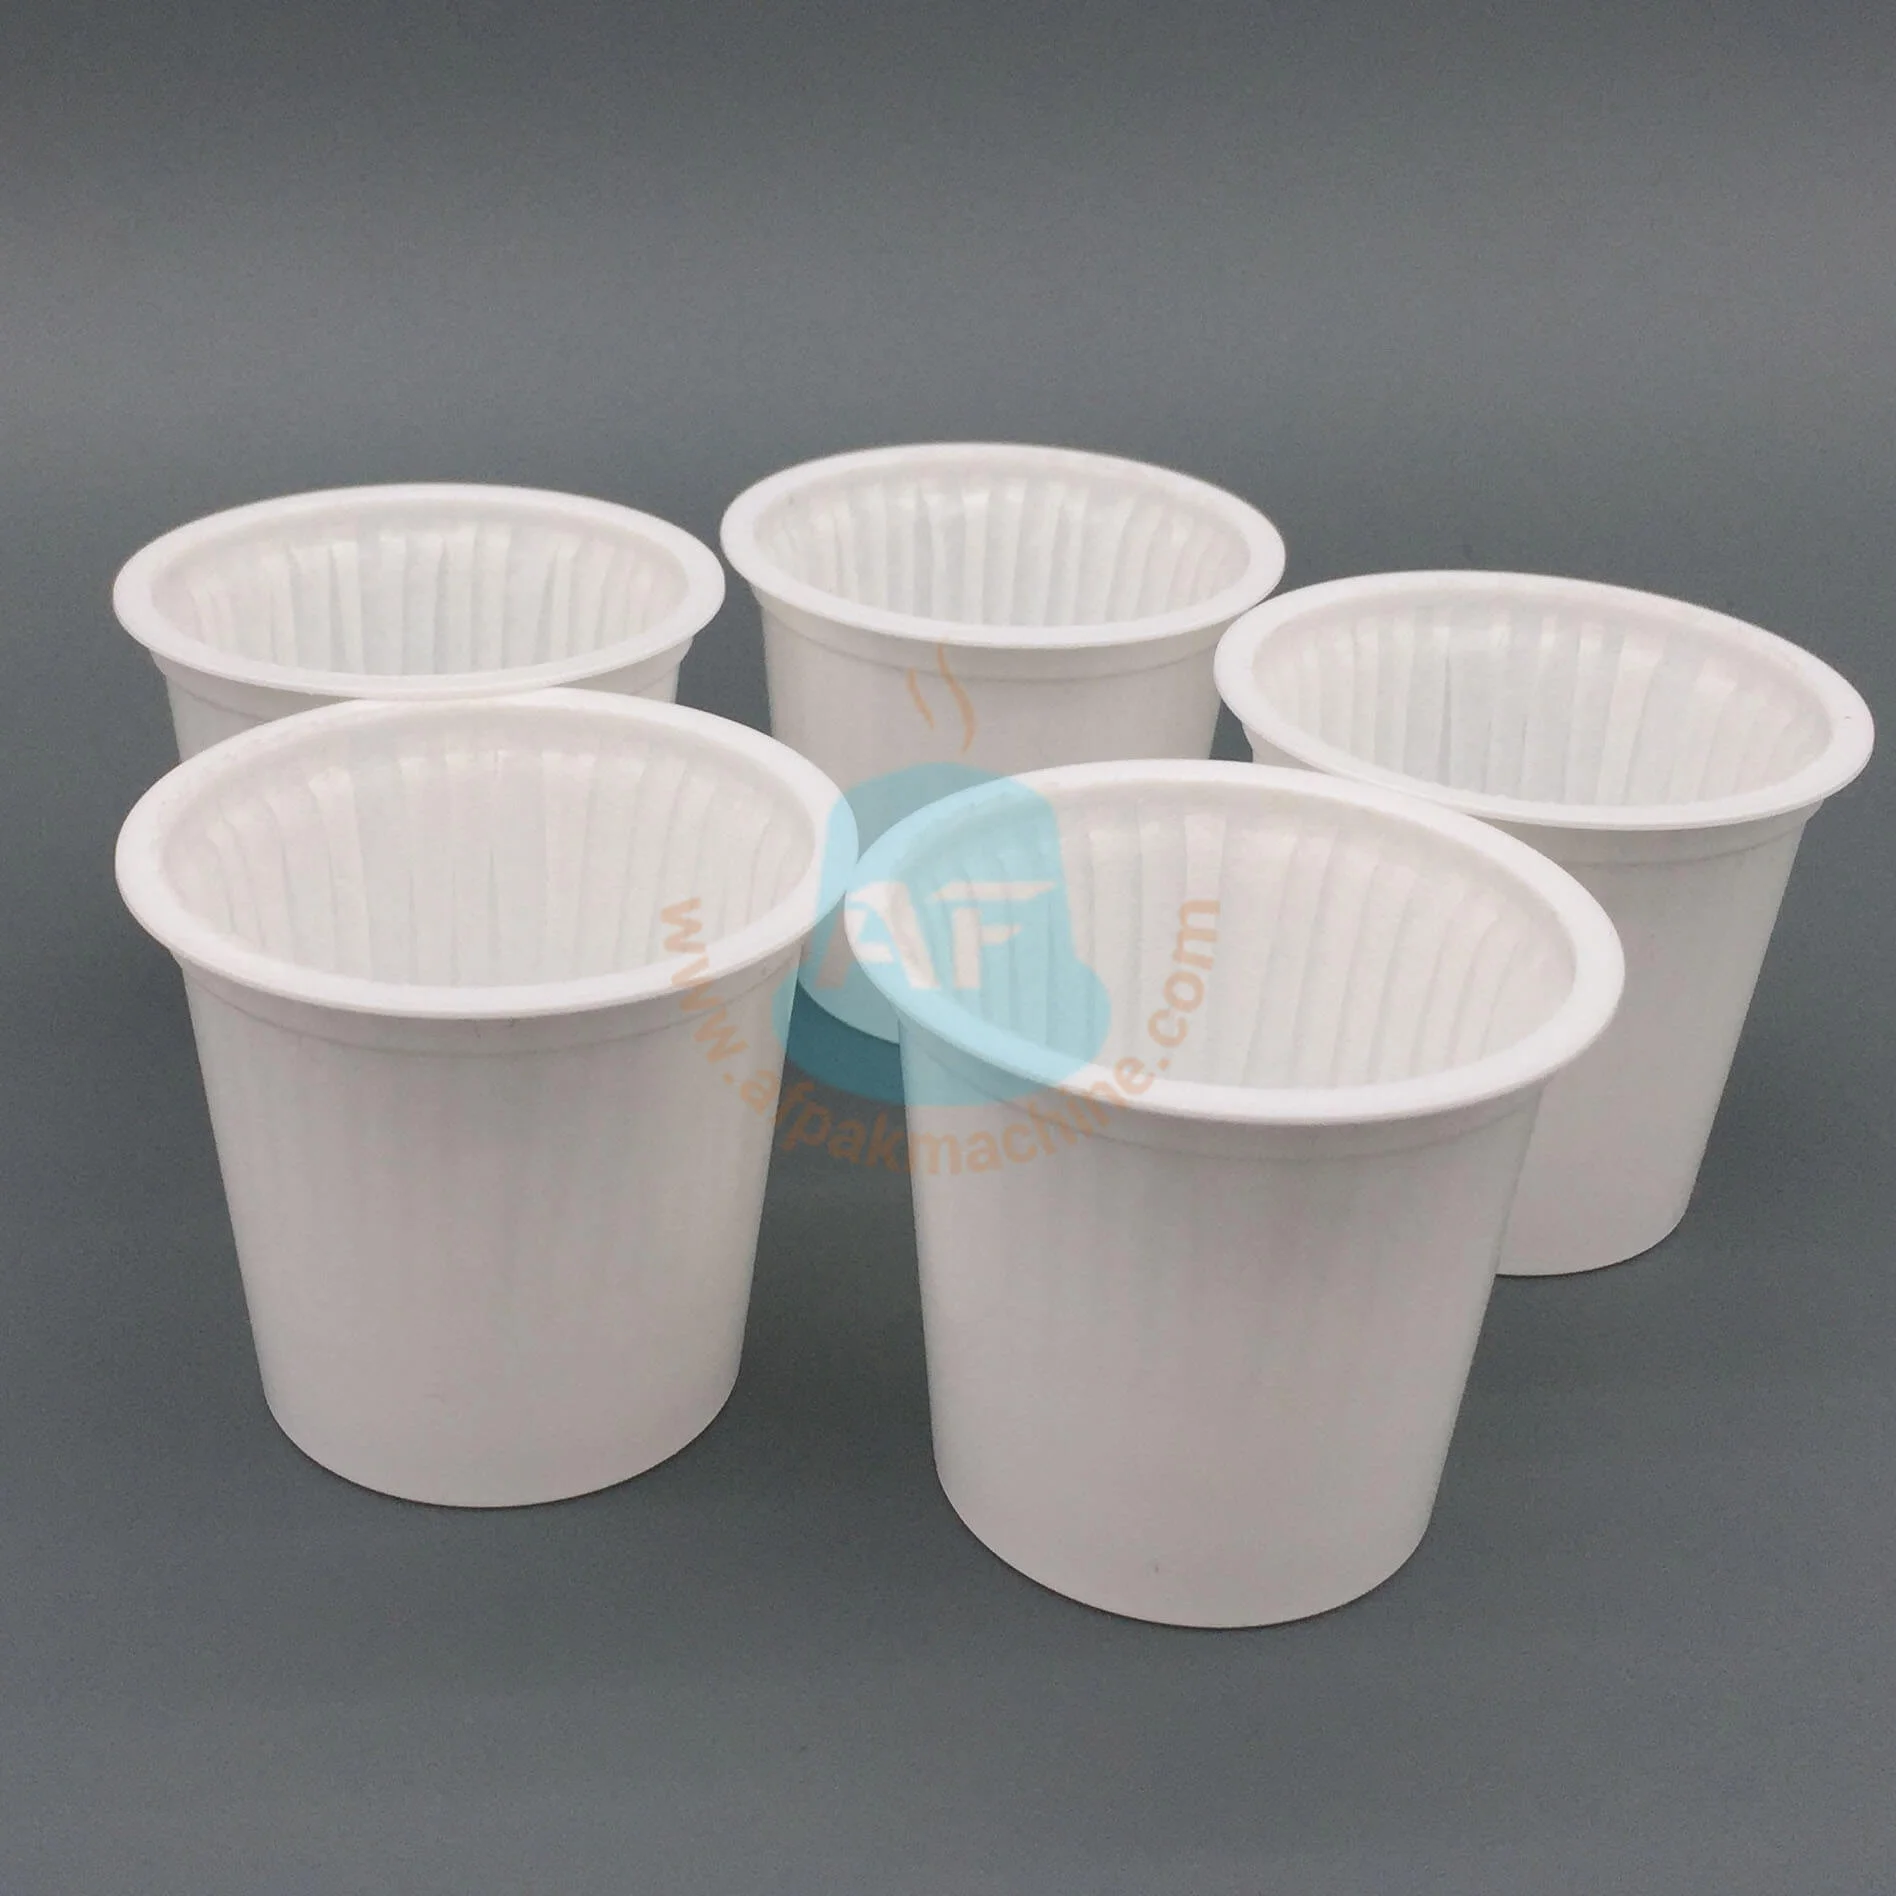 Empty K cups